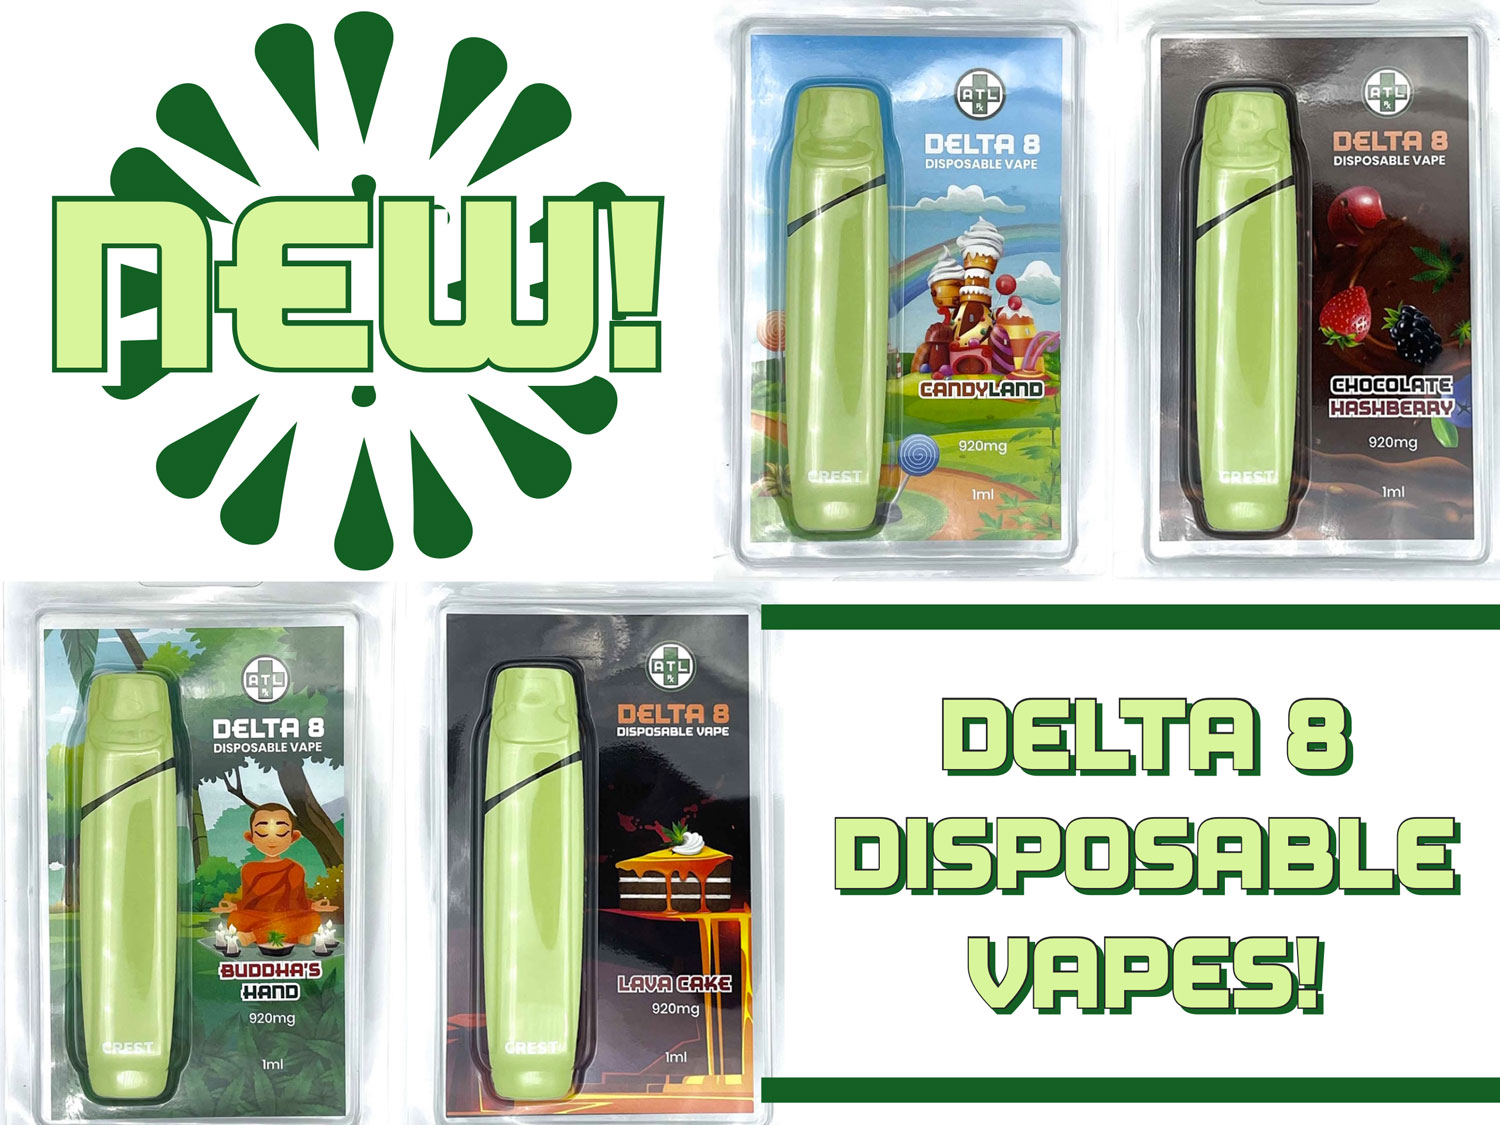 Introducing ATLRx Delta 8 Disposable Vapes!